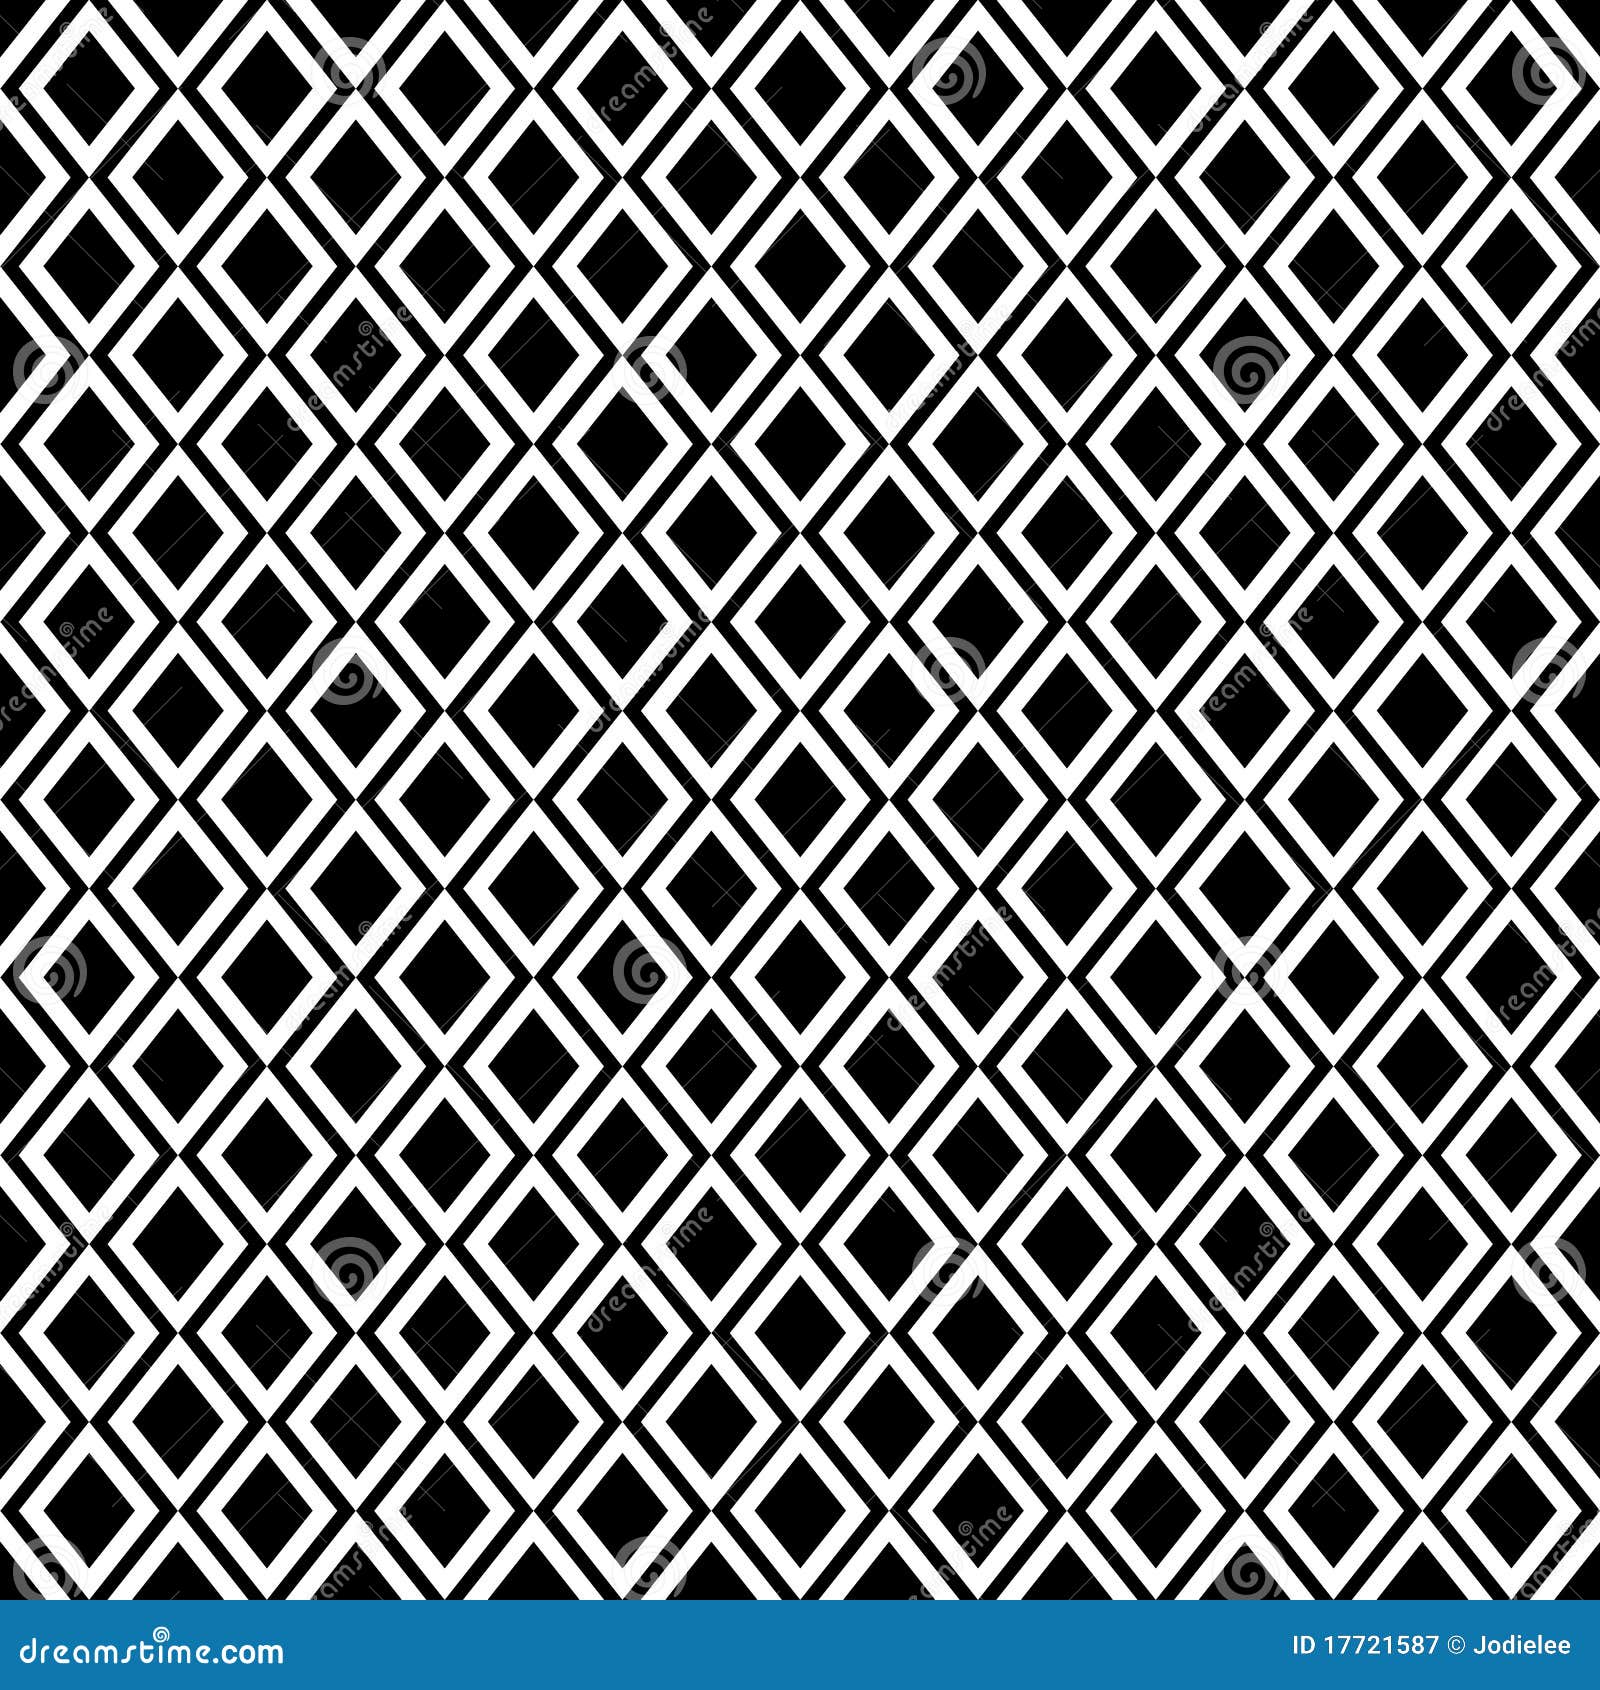 diamond  repeat tiled pattern